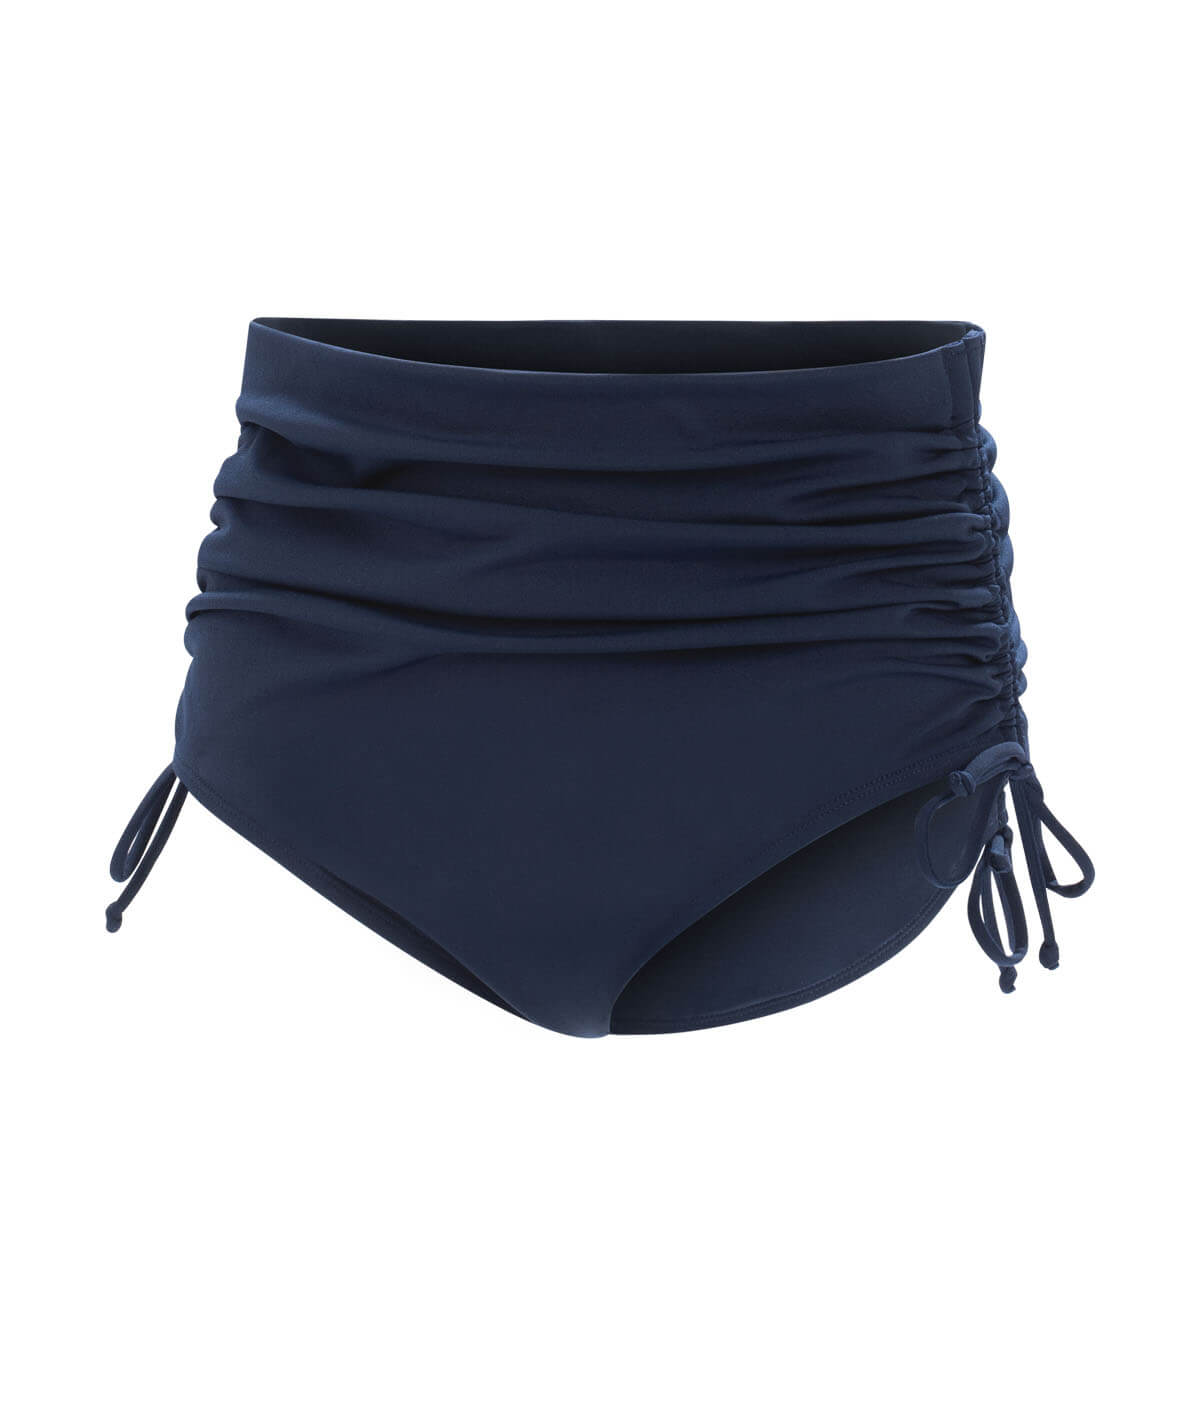 Aquashape Women's Adjustable High Waisted Moderate Brief Swimsuit Bottoms